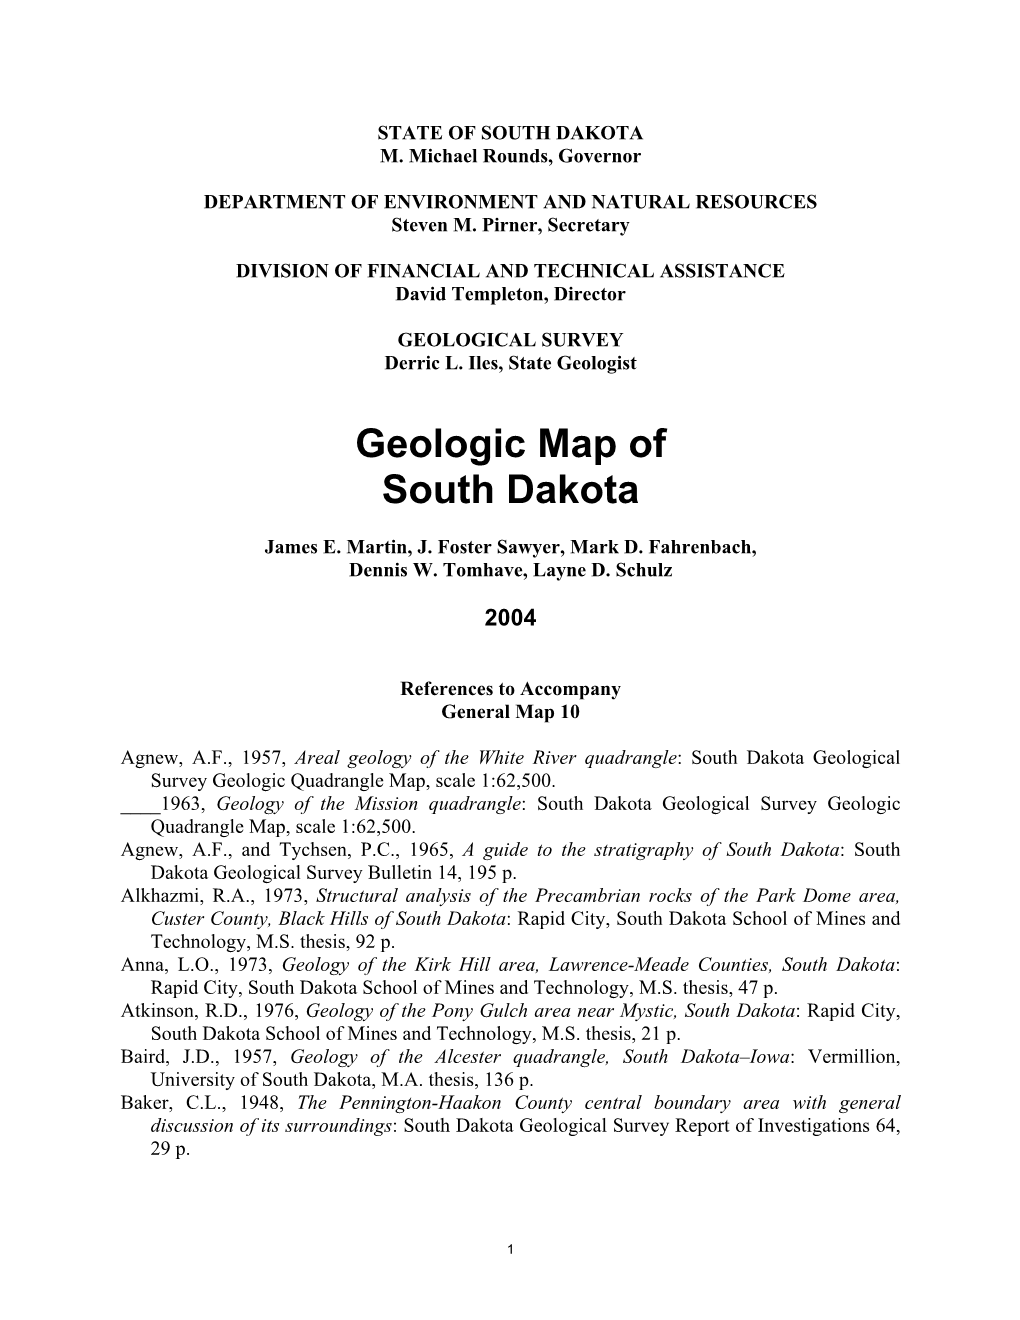 Geologic Map of South Dakota